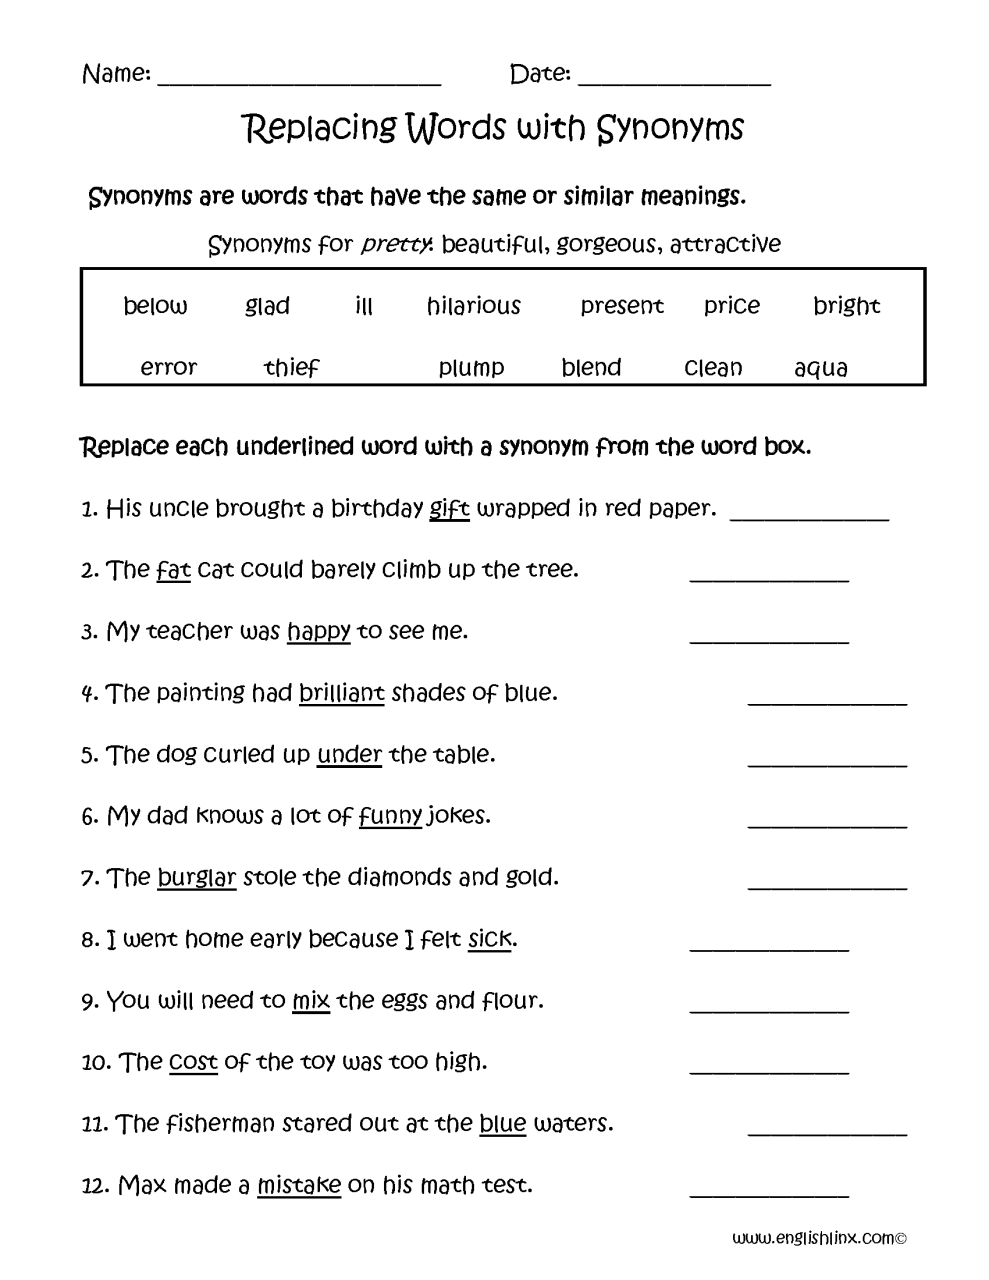 synonyms-and-antonyms-worksheets-6th-grade-kidsworksheetfun